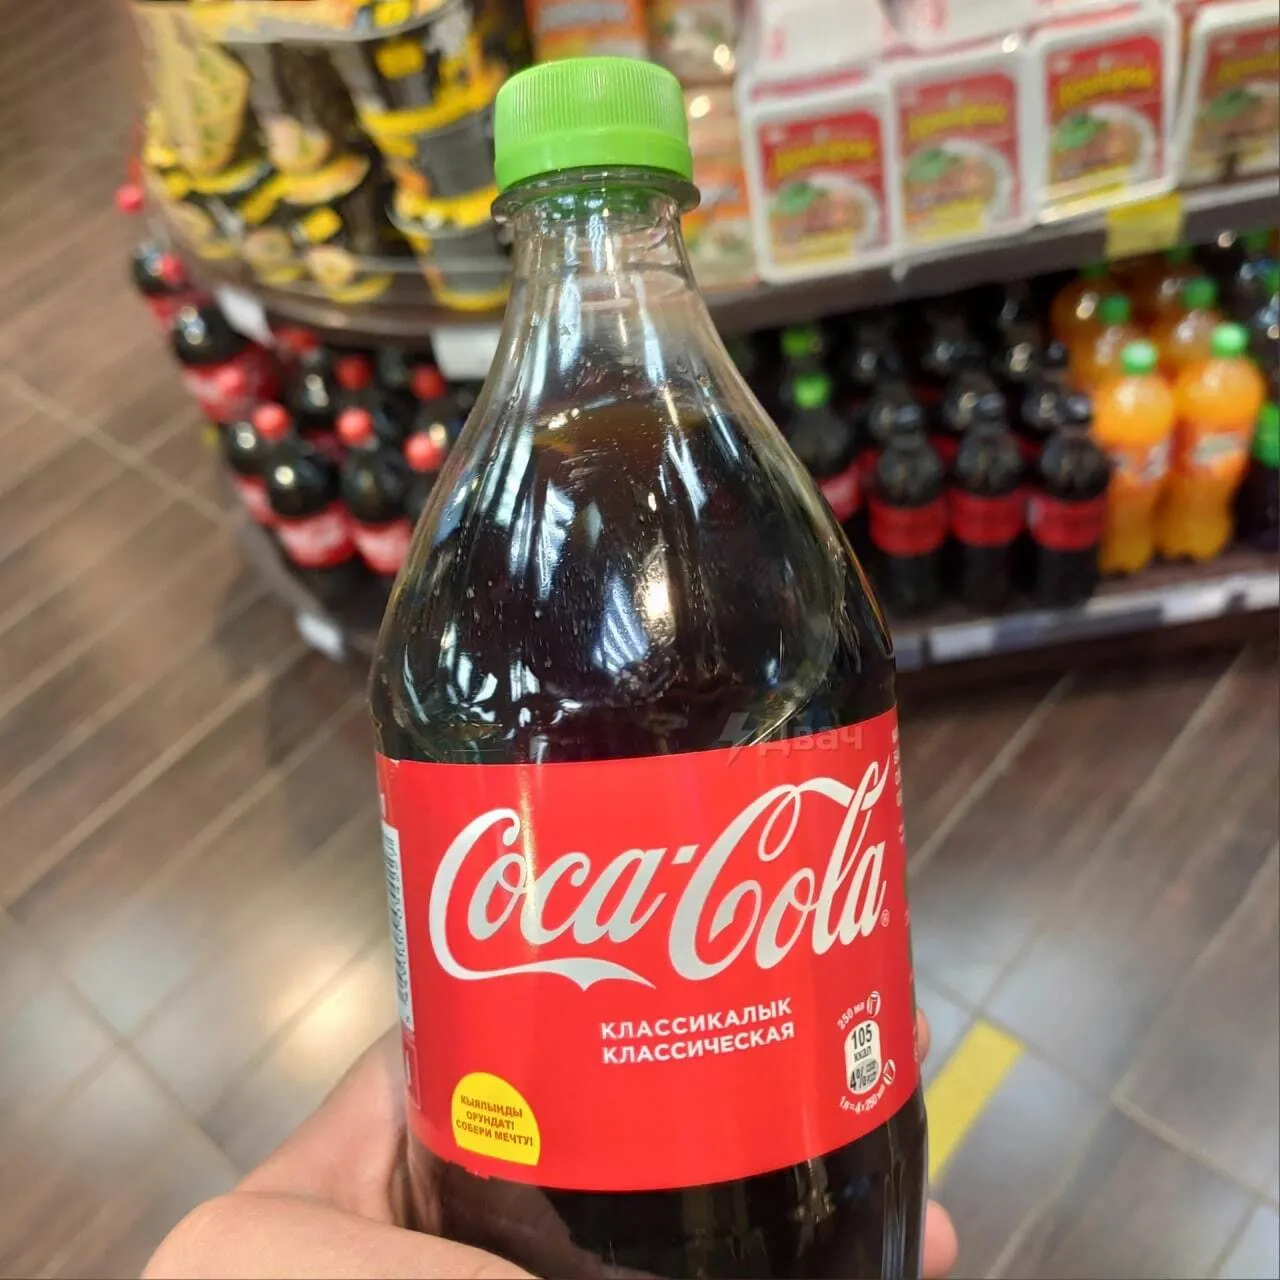      Coca-Cola qhiqqkiktiqxhroz